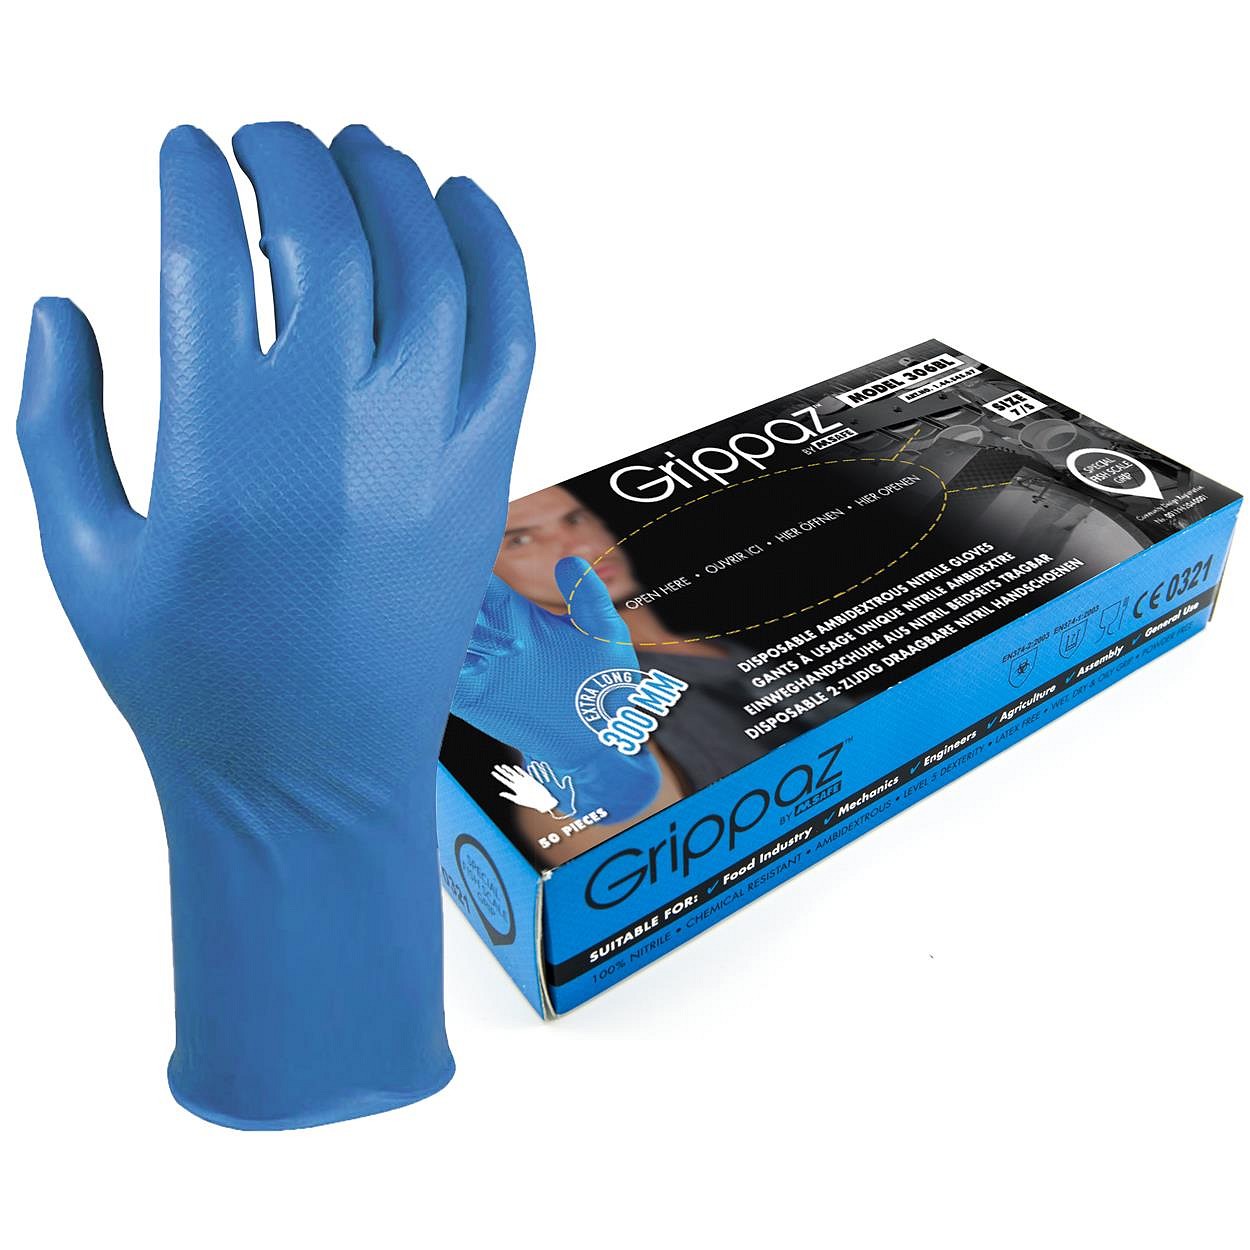 Oxxa X-Grippaz-Pro-Long 44-545 disposable handschoen